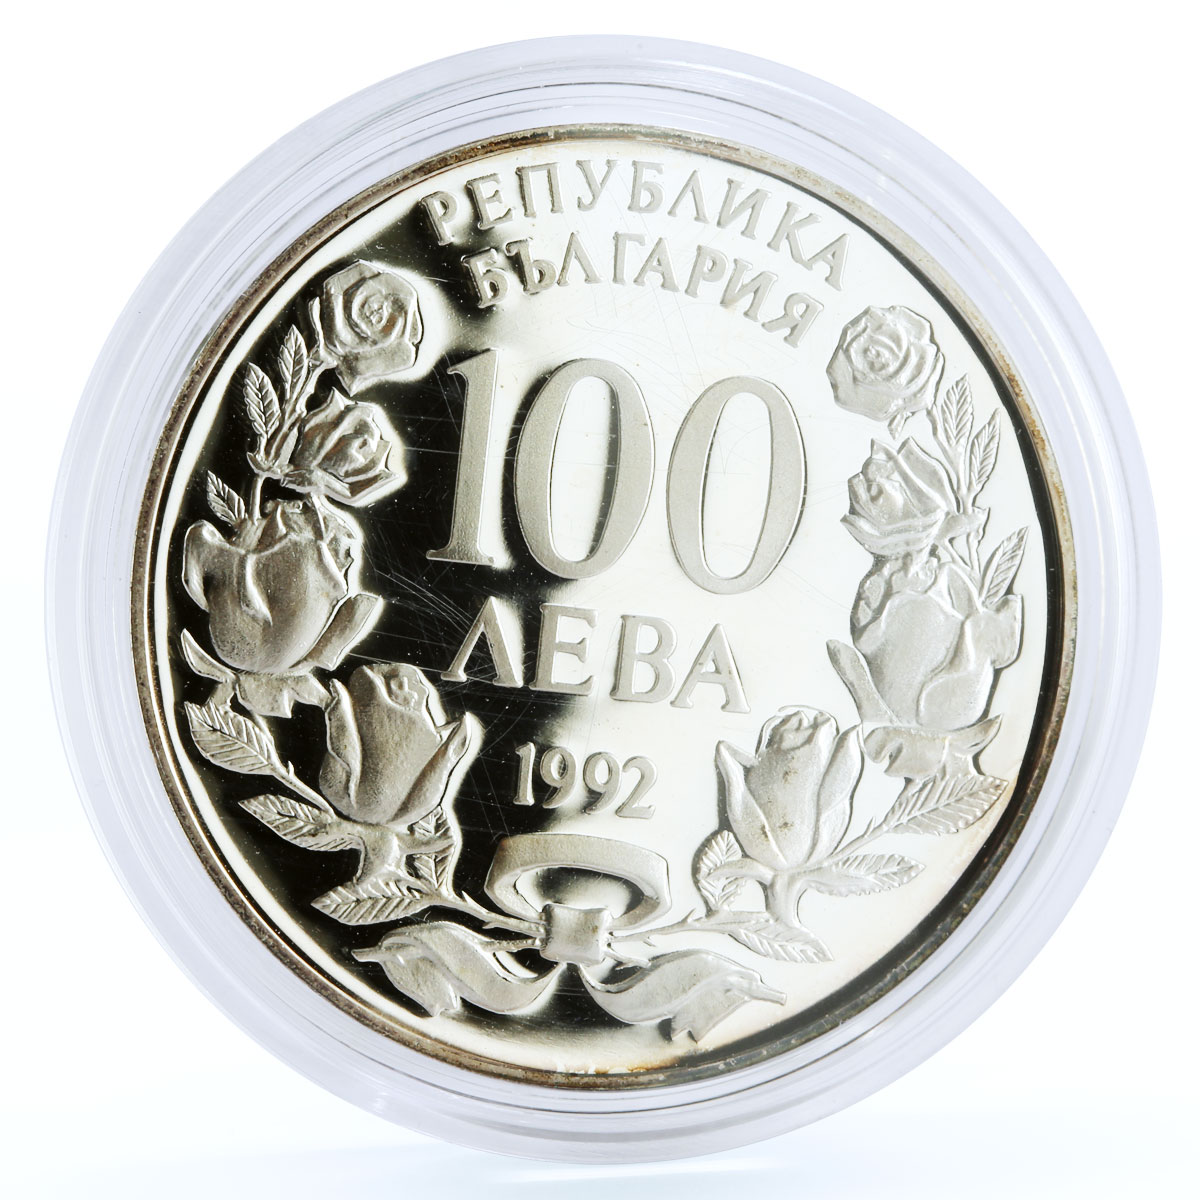 Bulgaria 100 leva The Radetsky Steam Liner Ship proof silver coin 1992